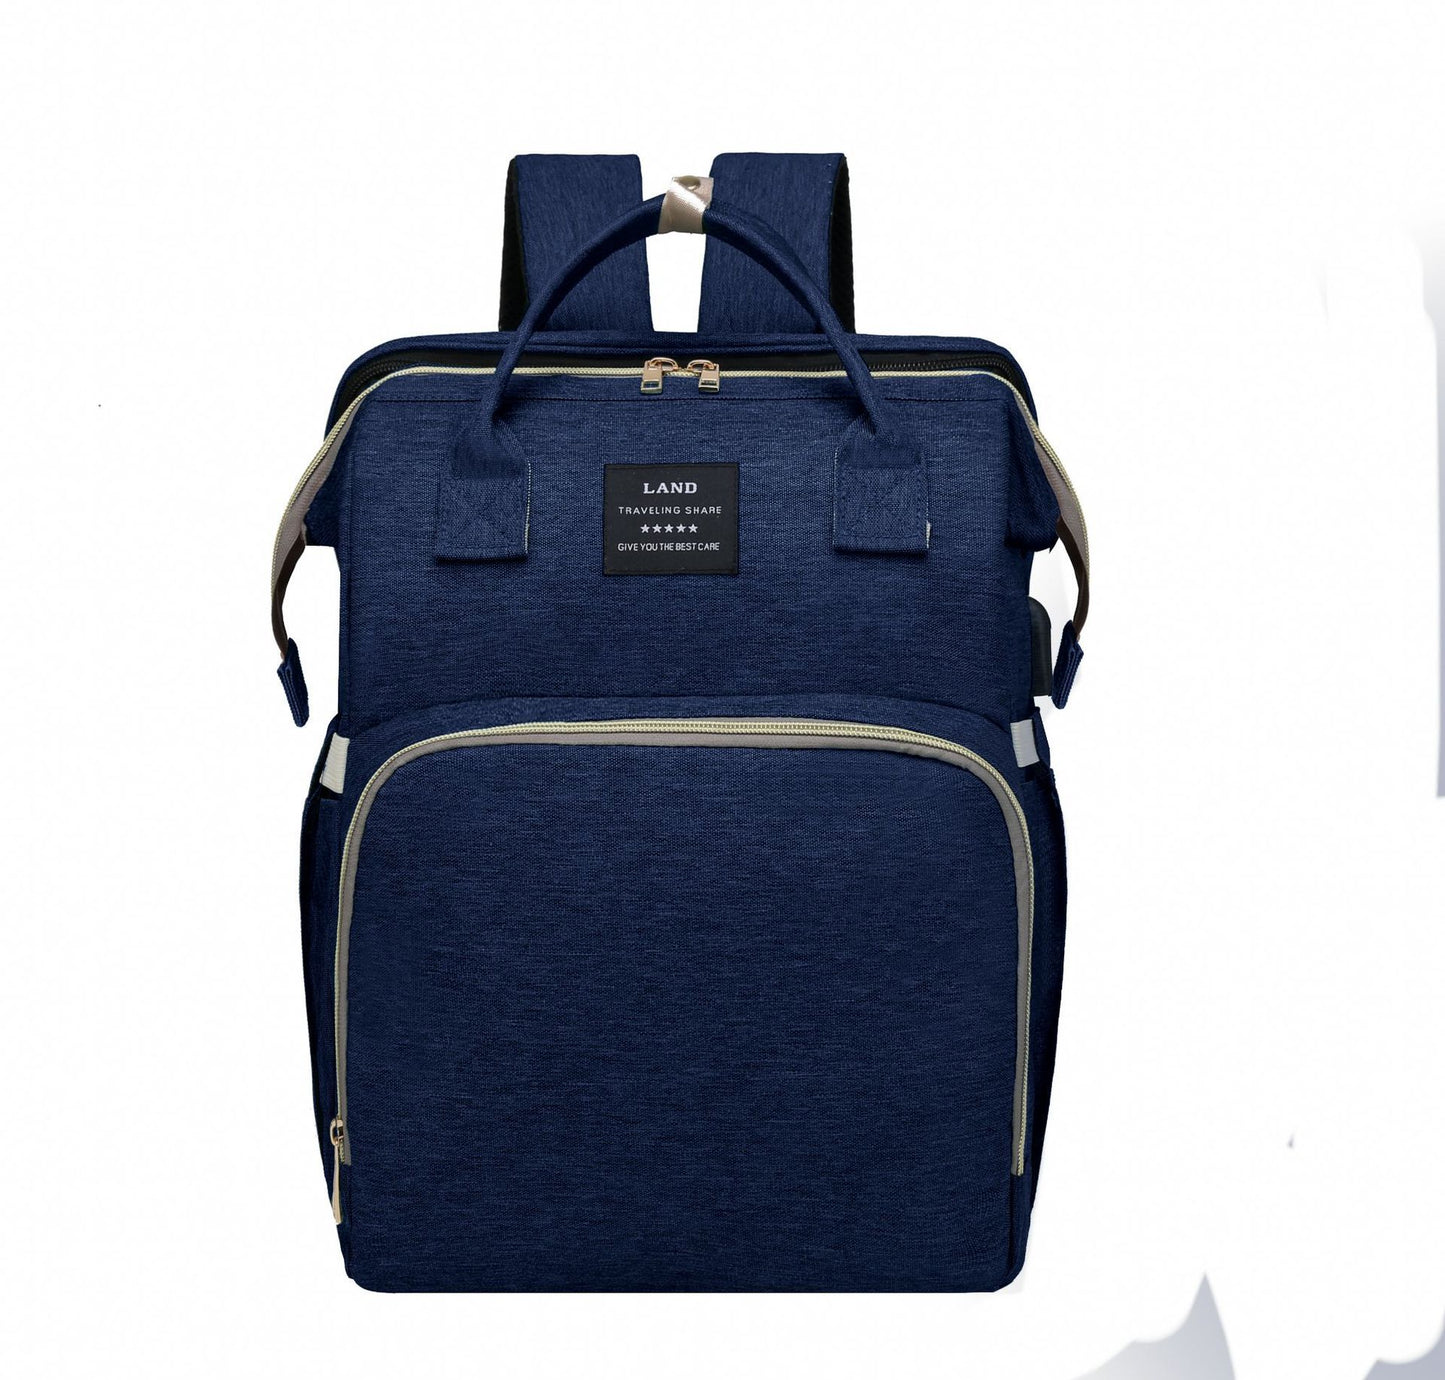 Crib backpack in color dark blue